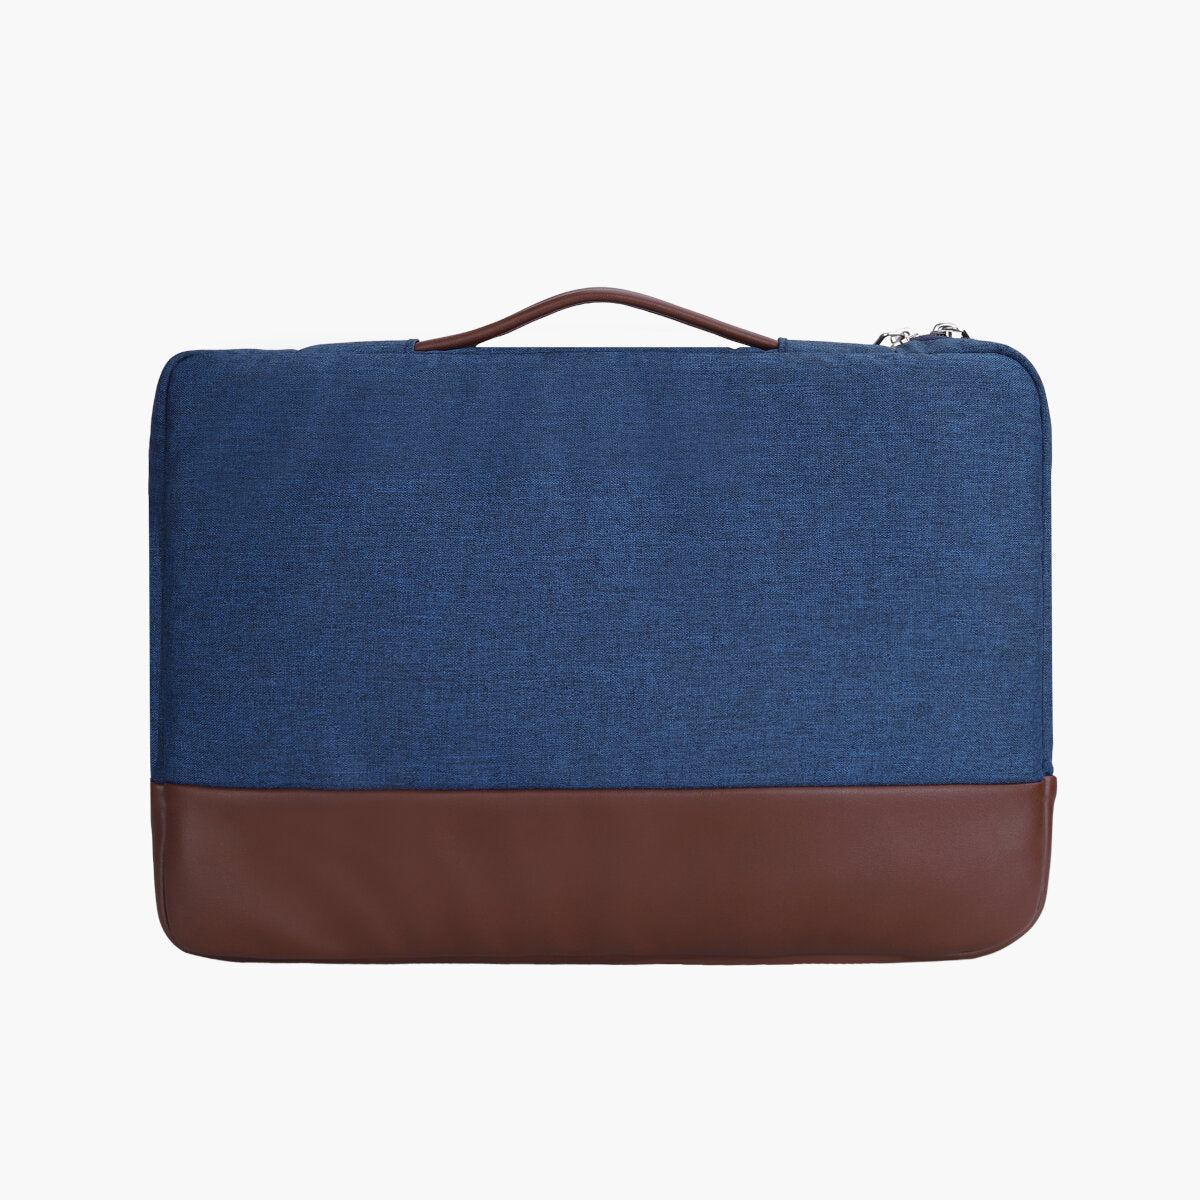 Indigo | Protecta Lima Laptop Bag